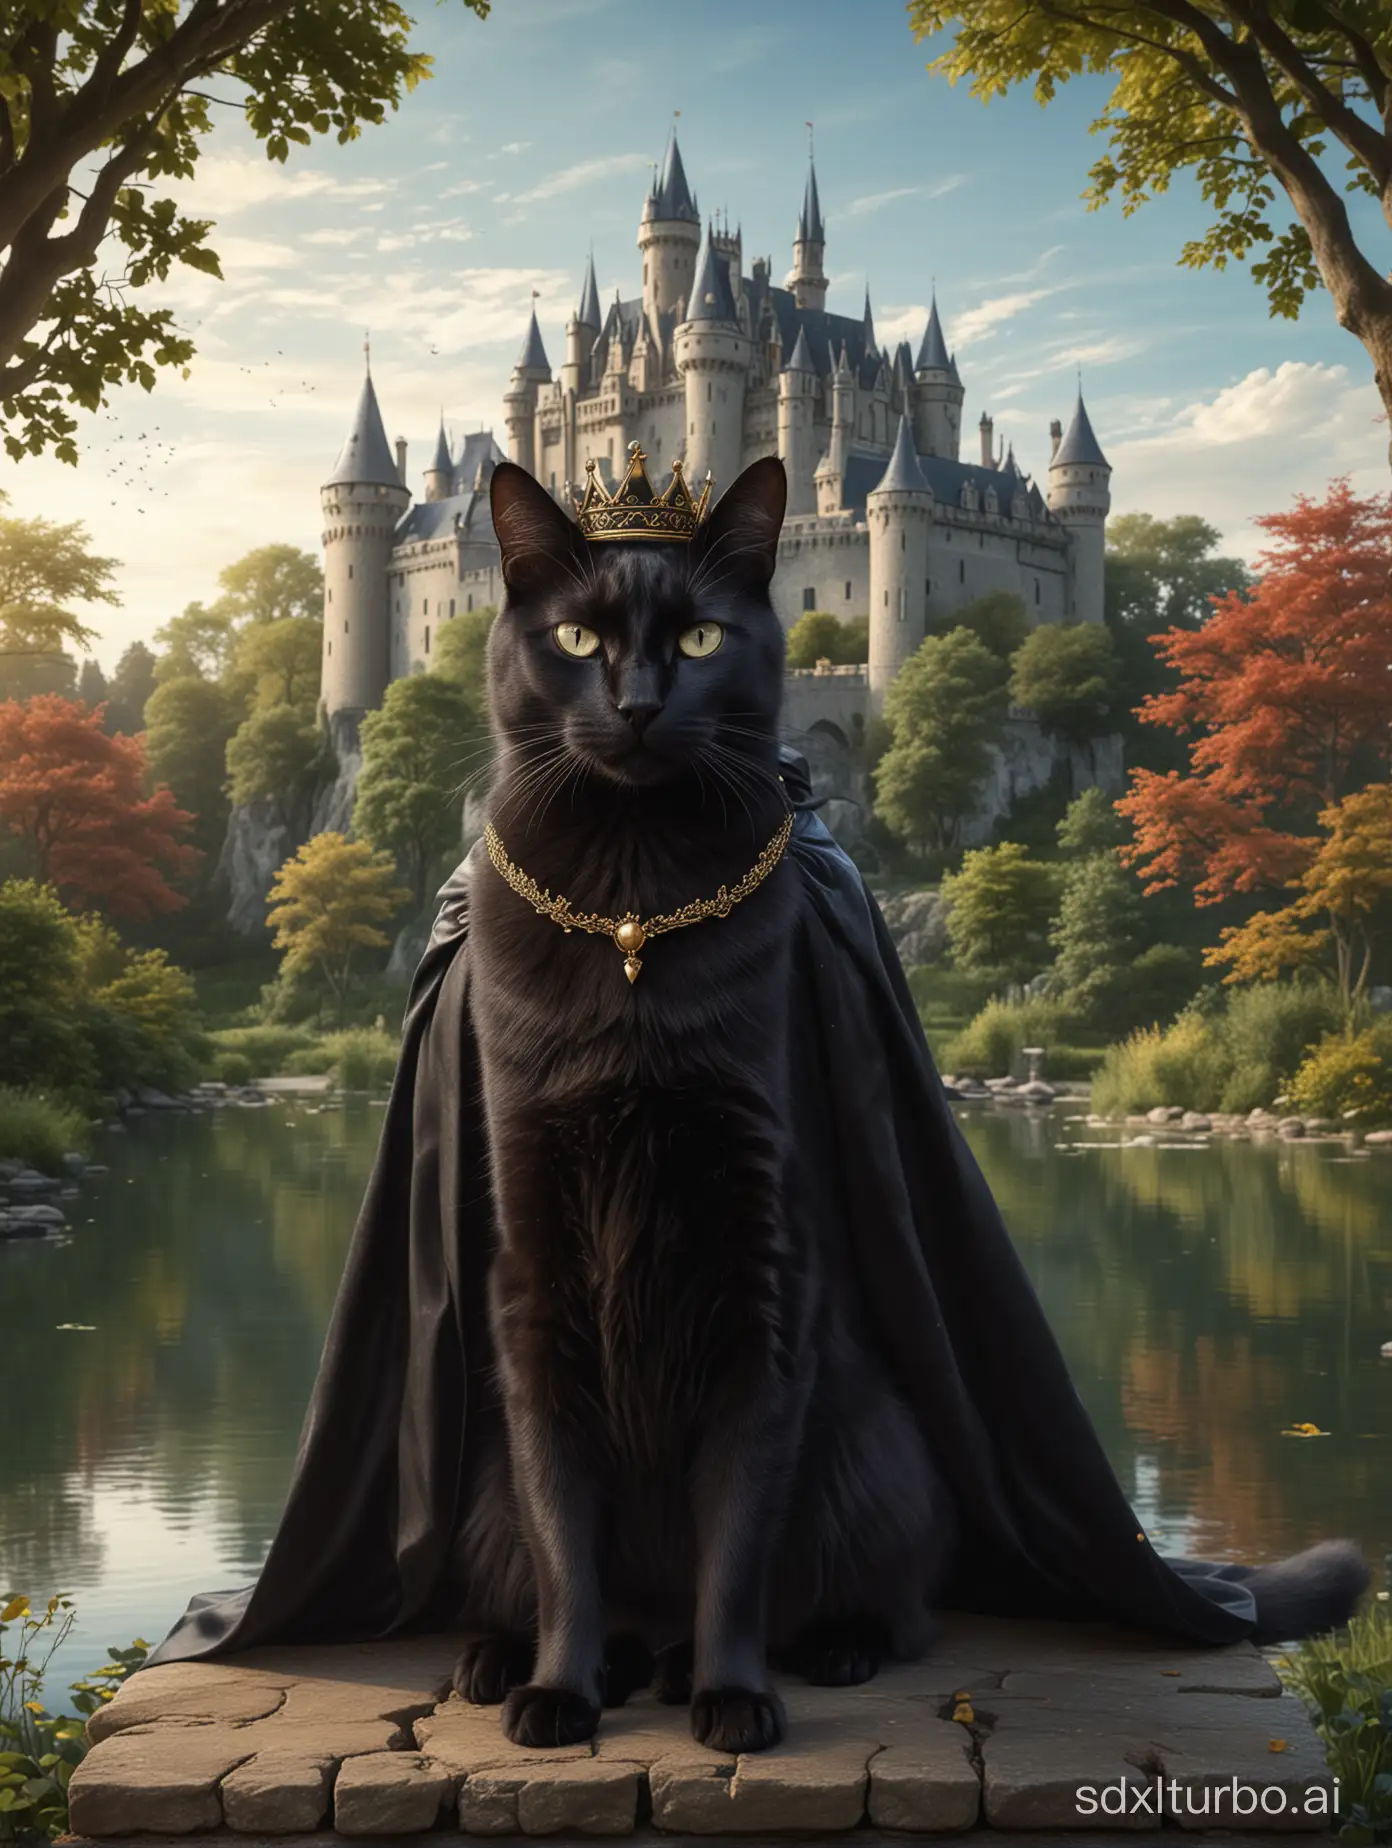 Majestic-Feline-Monarch-in-Regal-Attire-with-Royal-Castle-and-Serene-Landscape